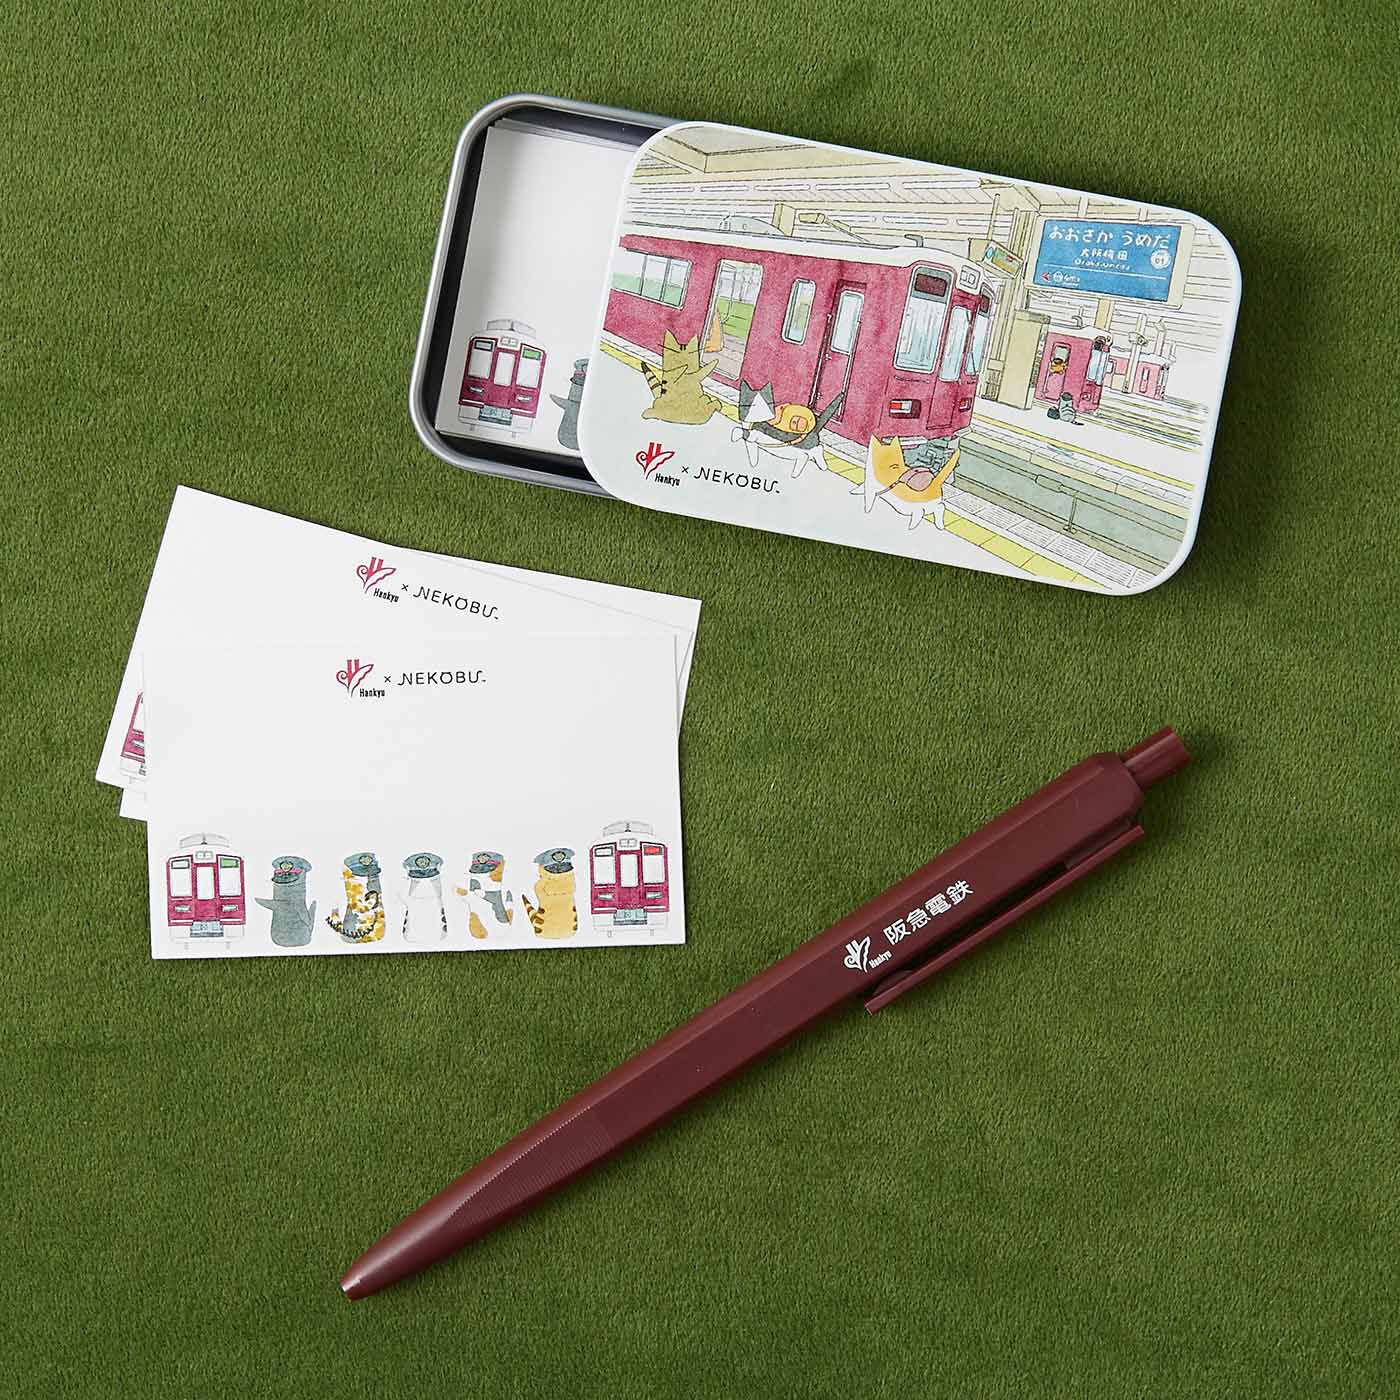 Real Stock|阪急電鉄×猫部　沿線風景を楽しむ缶入りメッセージカード